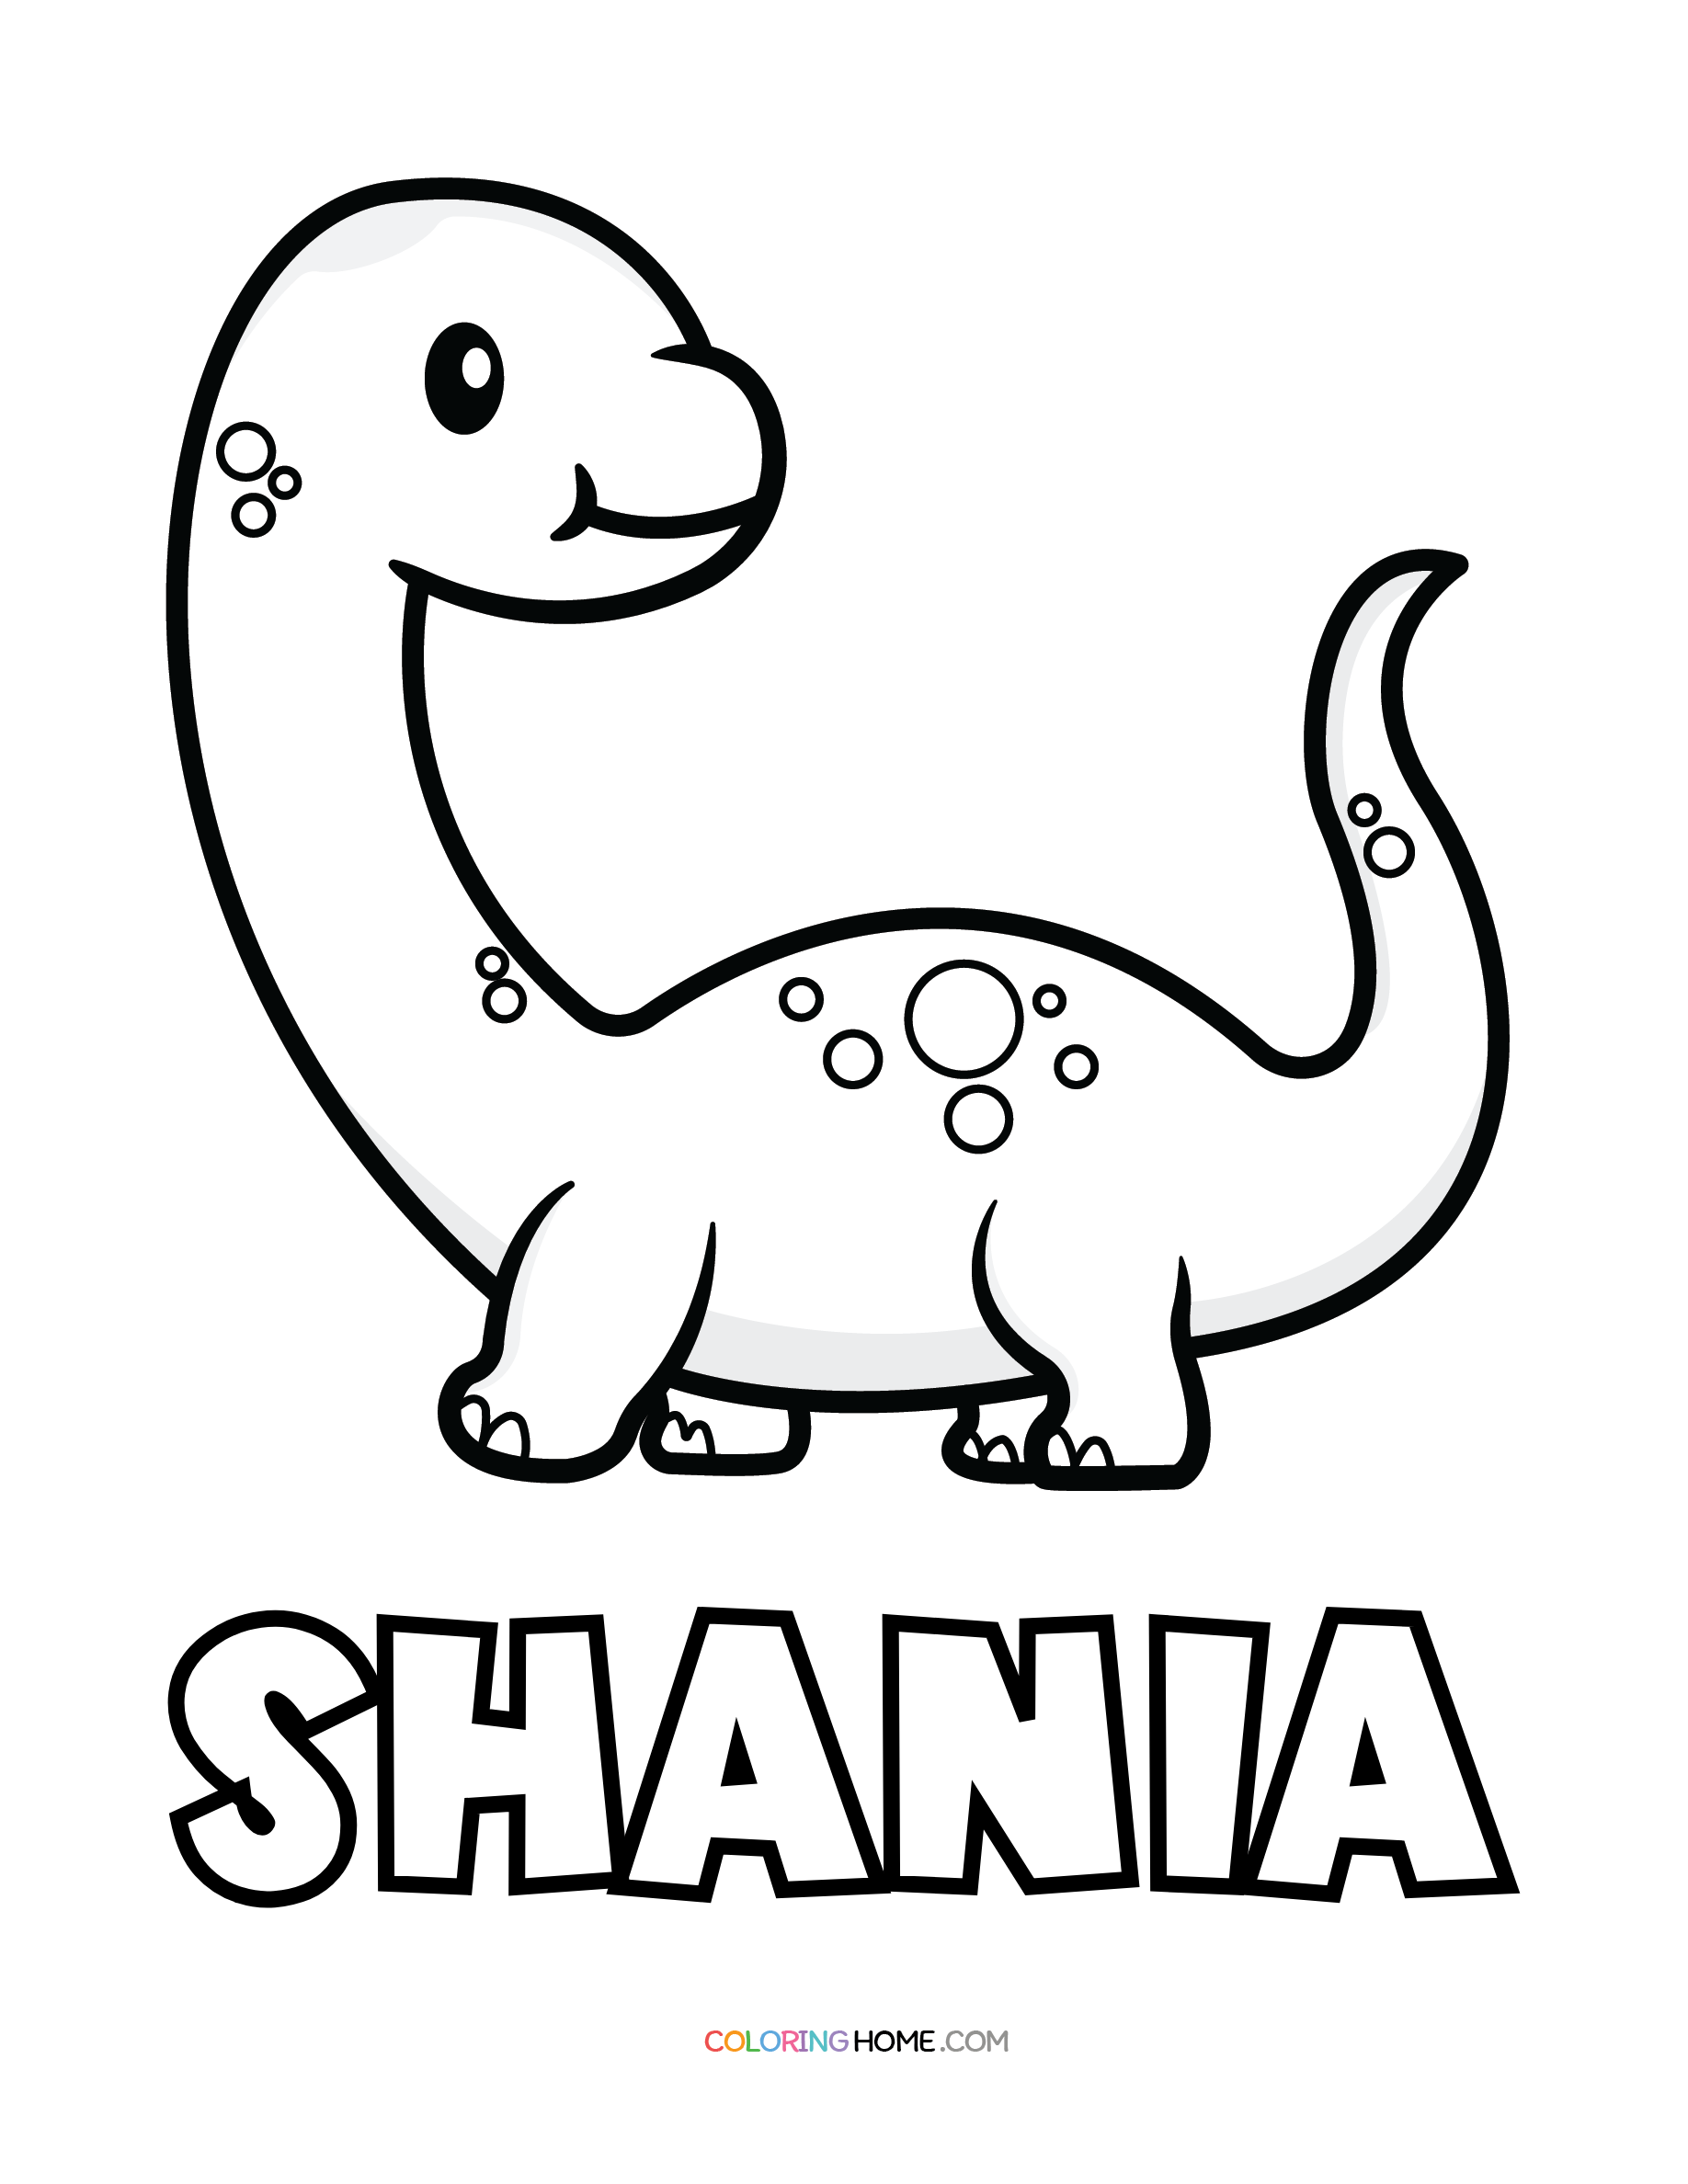 Shania dinosaur coloring page